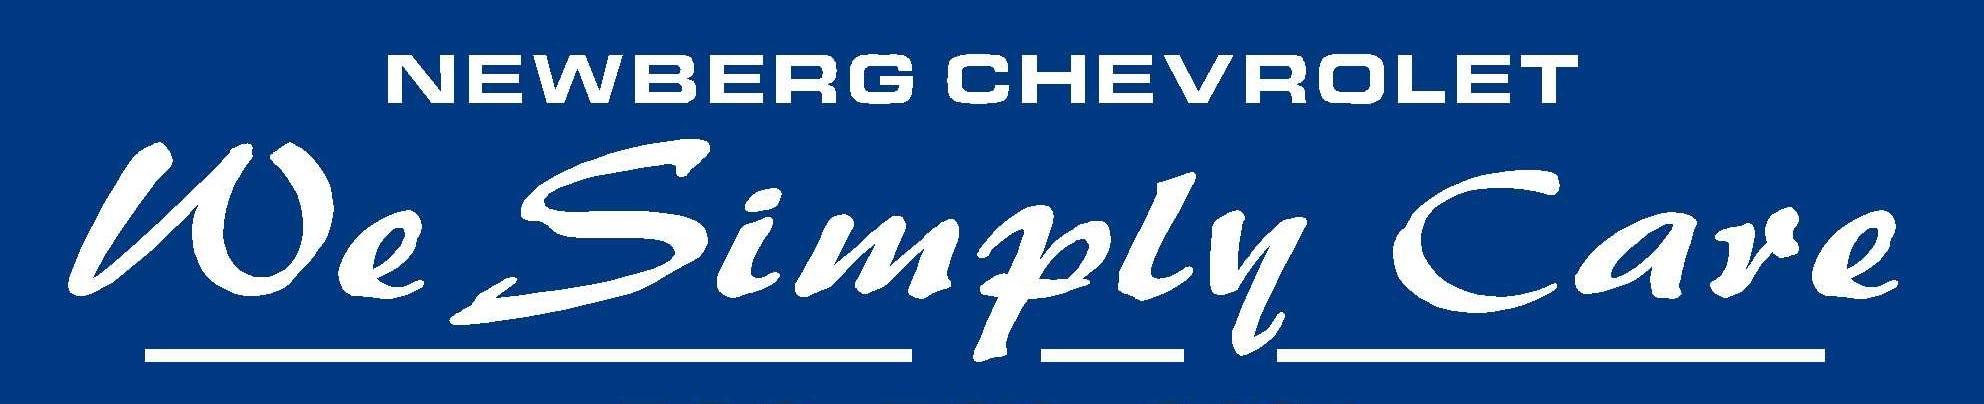 Newberg Chevrolet